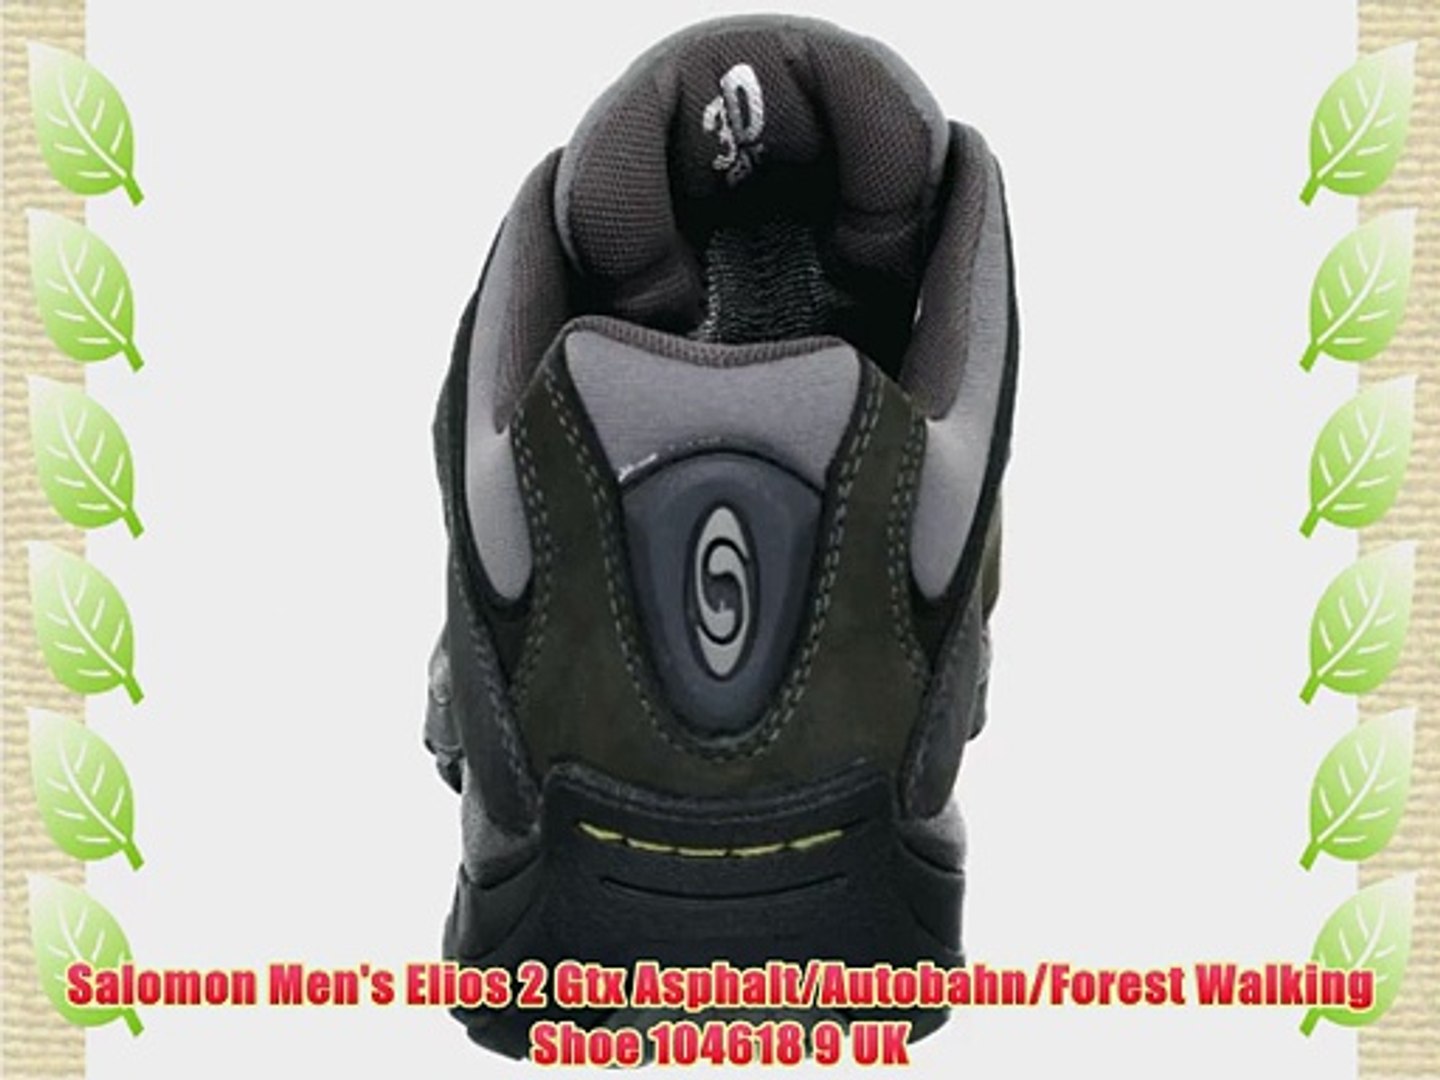 Salomon Men's Elios 2 Gtx Asphalt/Autobahn/Forest Walking Shoe 104618 9 UK  - video Dailymotion